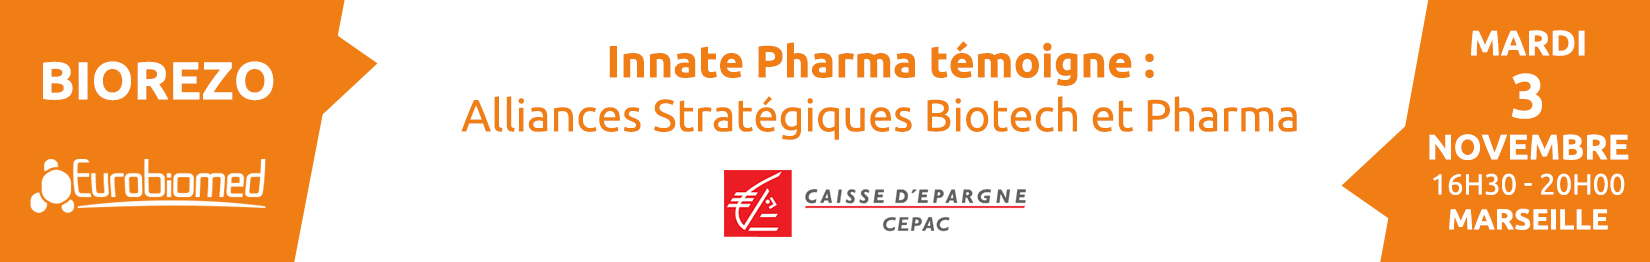 Biorézo Innate Pharma témoigne – Alliances Stratégiques Biotech et Pharma